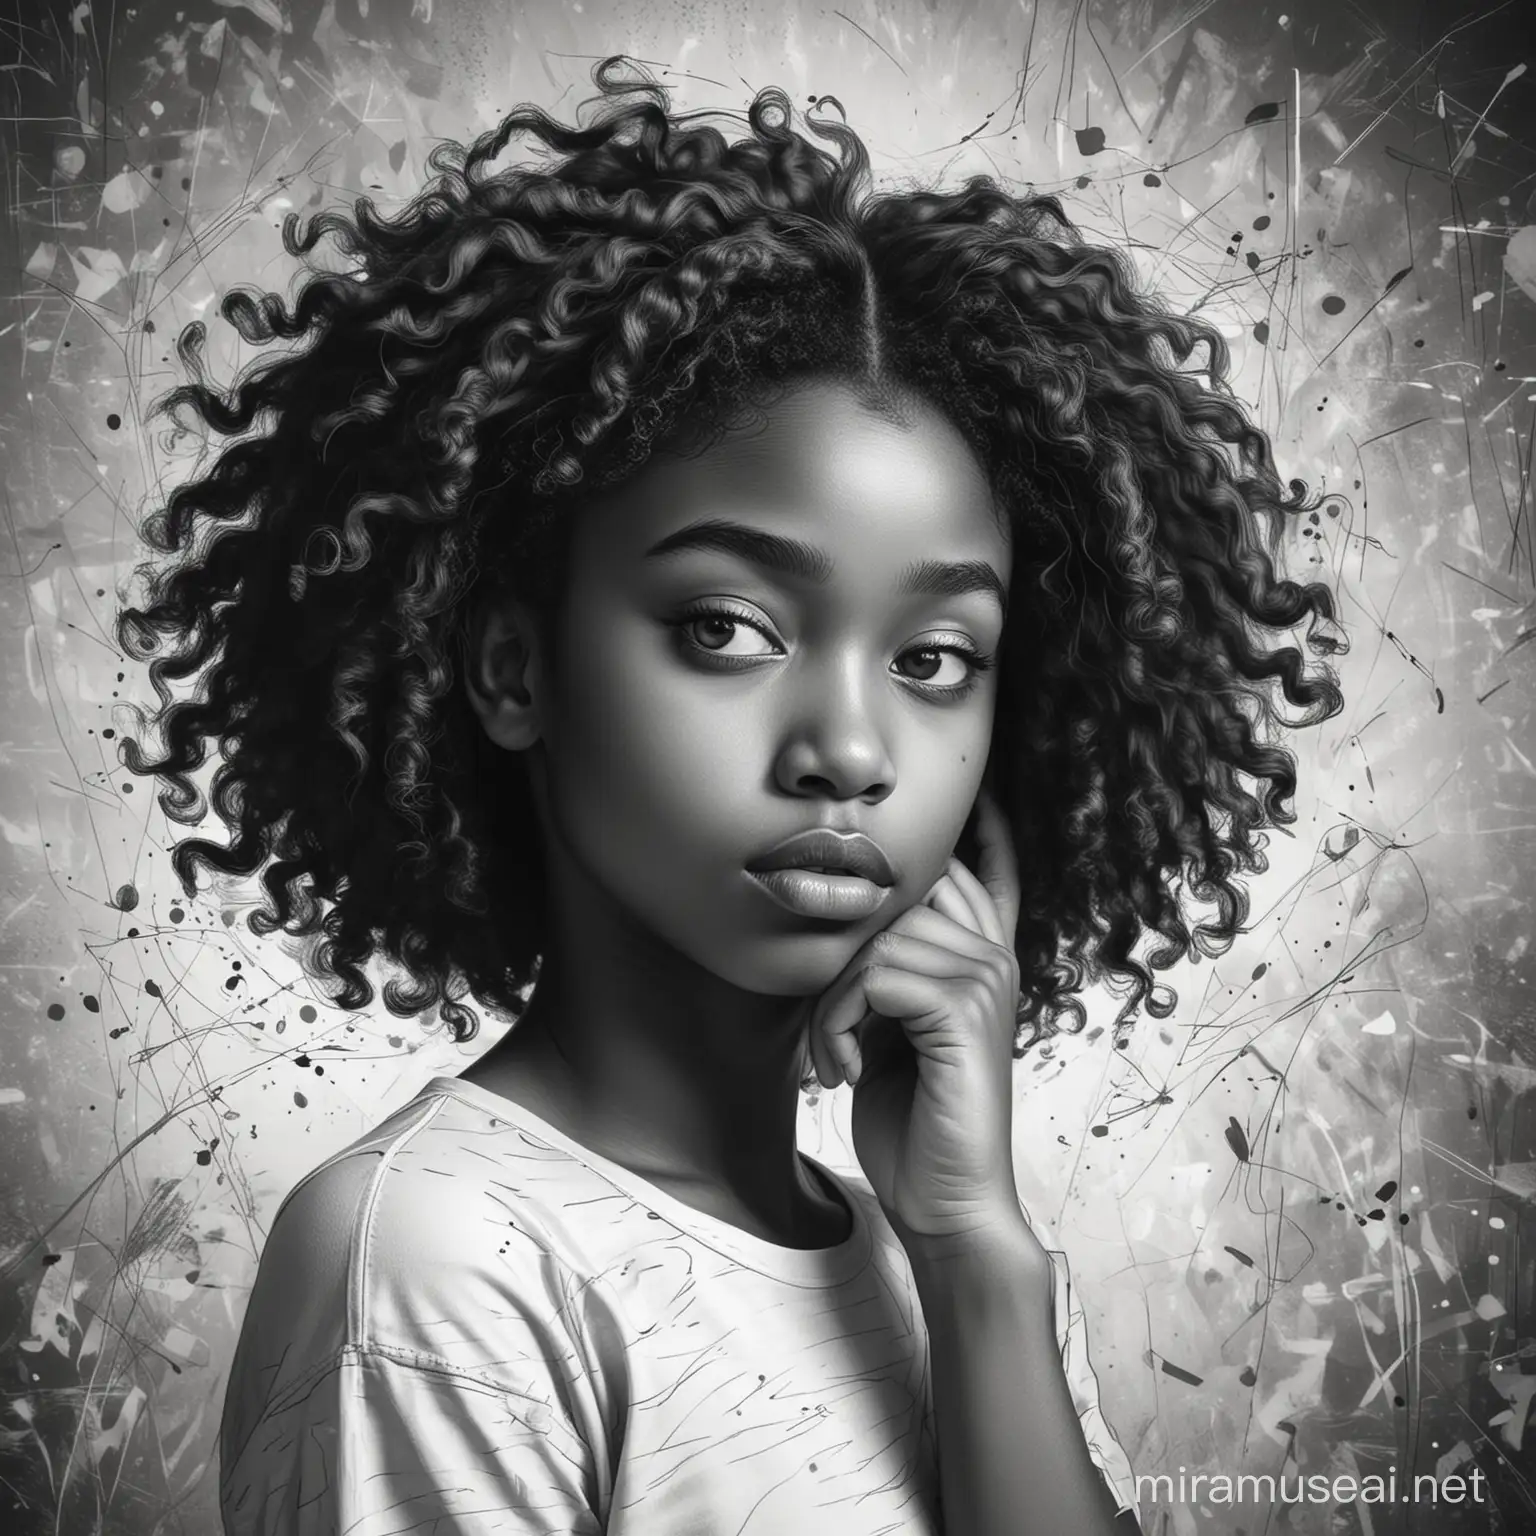 Contemplative Young Black Woman in Monochrome Sketch